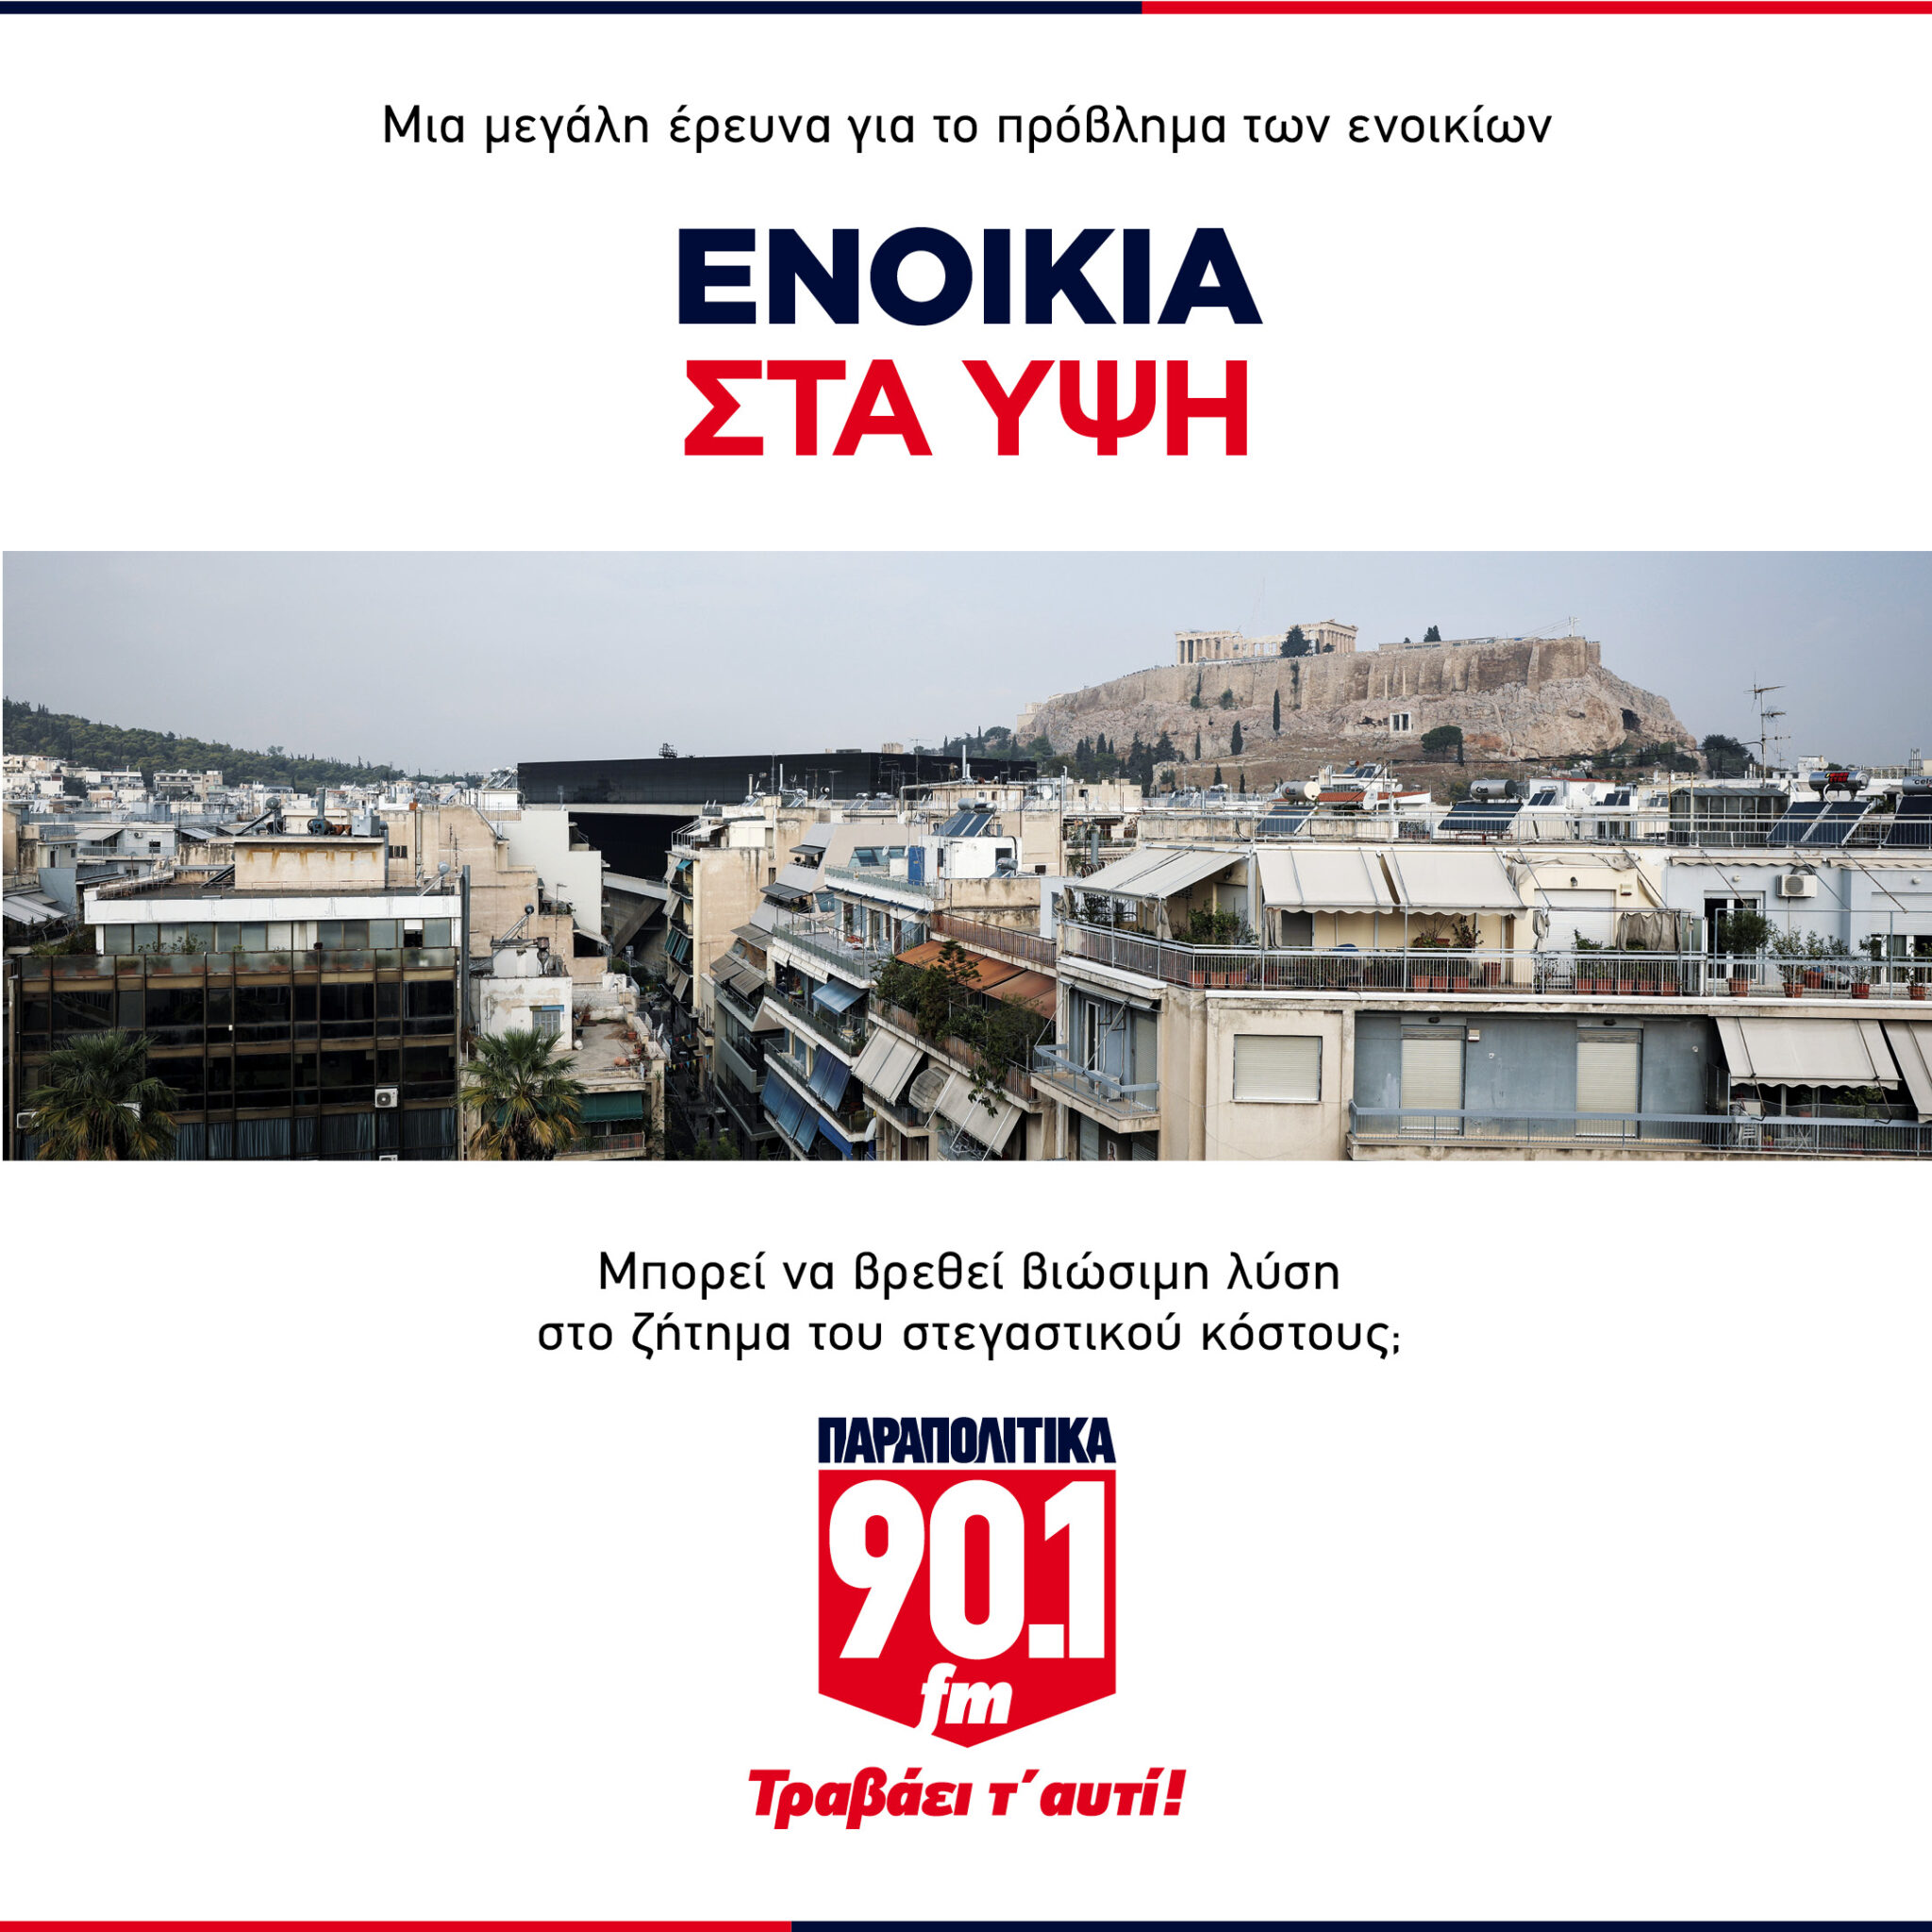 You are currently viewing Ενοίκια στα ύψη – Η μεγάλη έρευνα του ραδιοφωνικού σταθμού Παραπολιτικά 90,1